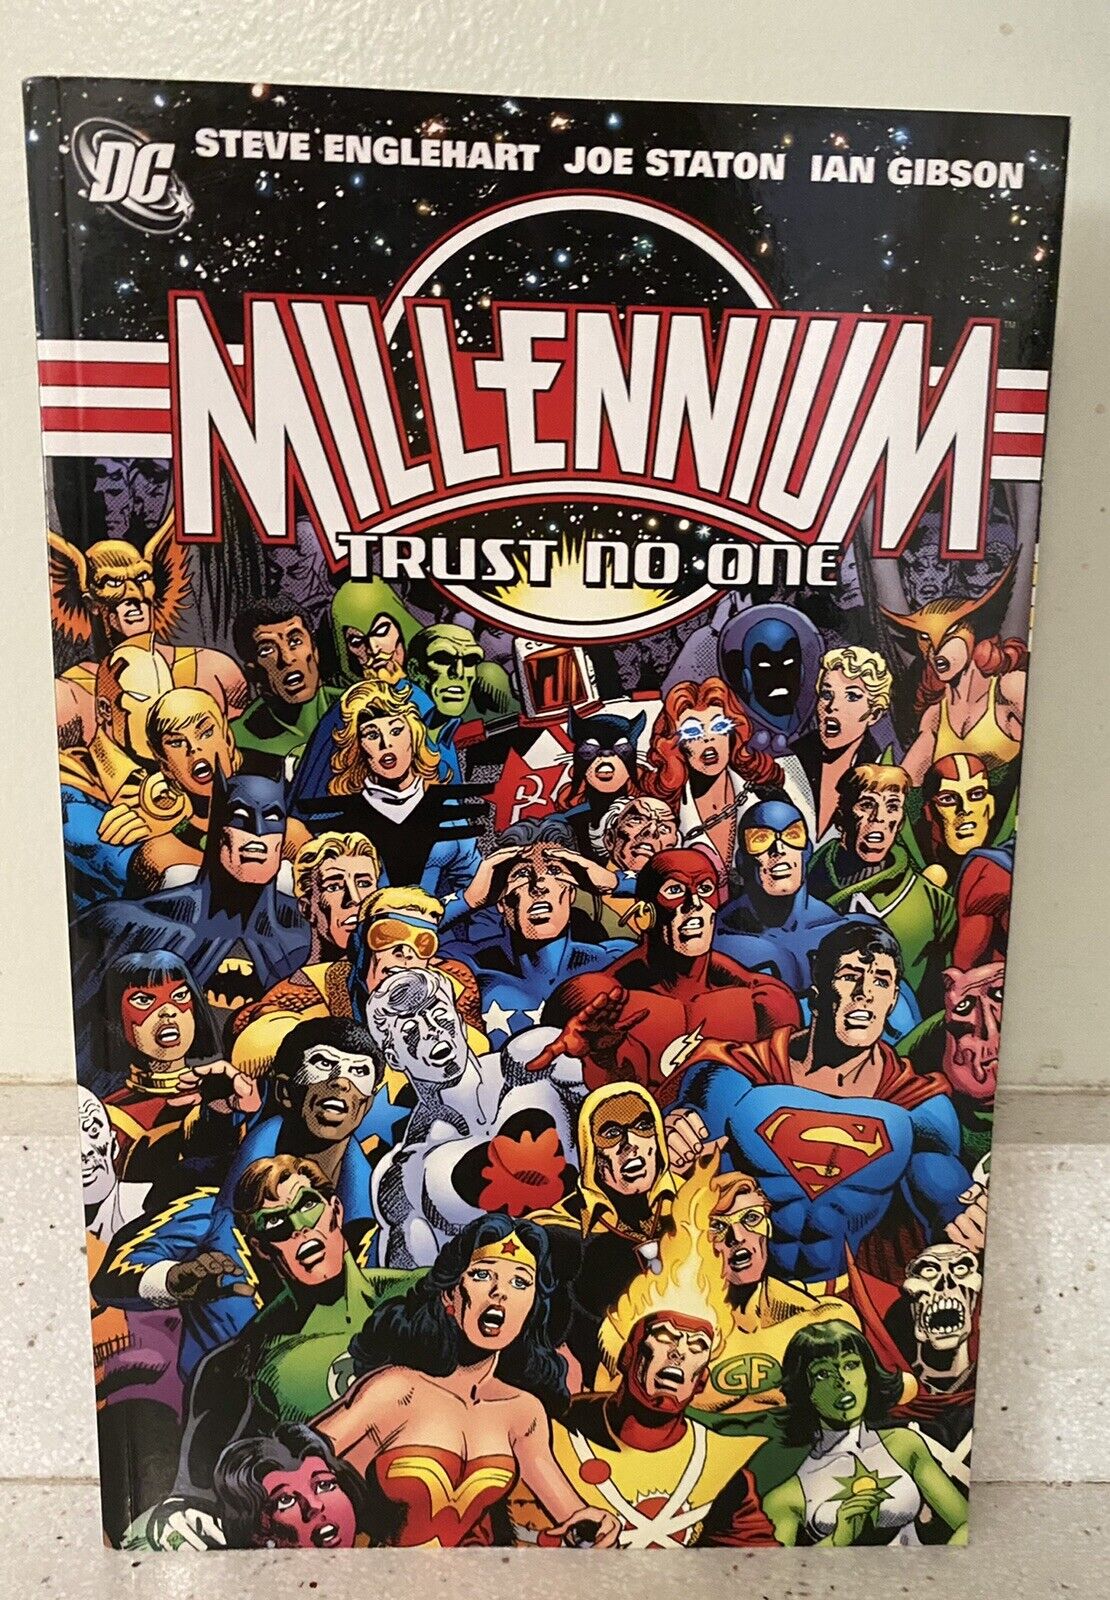 Millennium (Trust No One) by Steve Englehart (2008, TPB) DC Comics 363